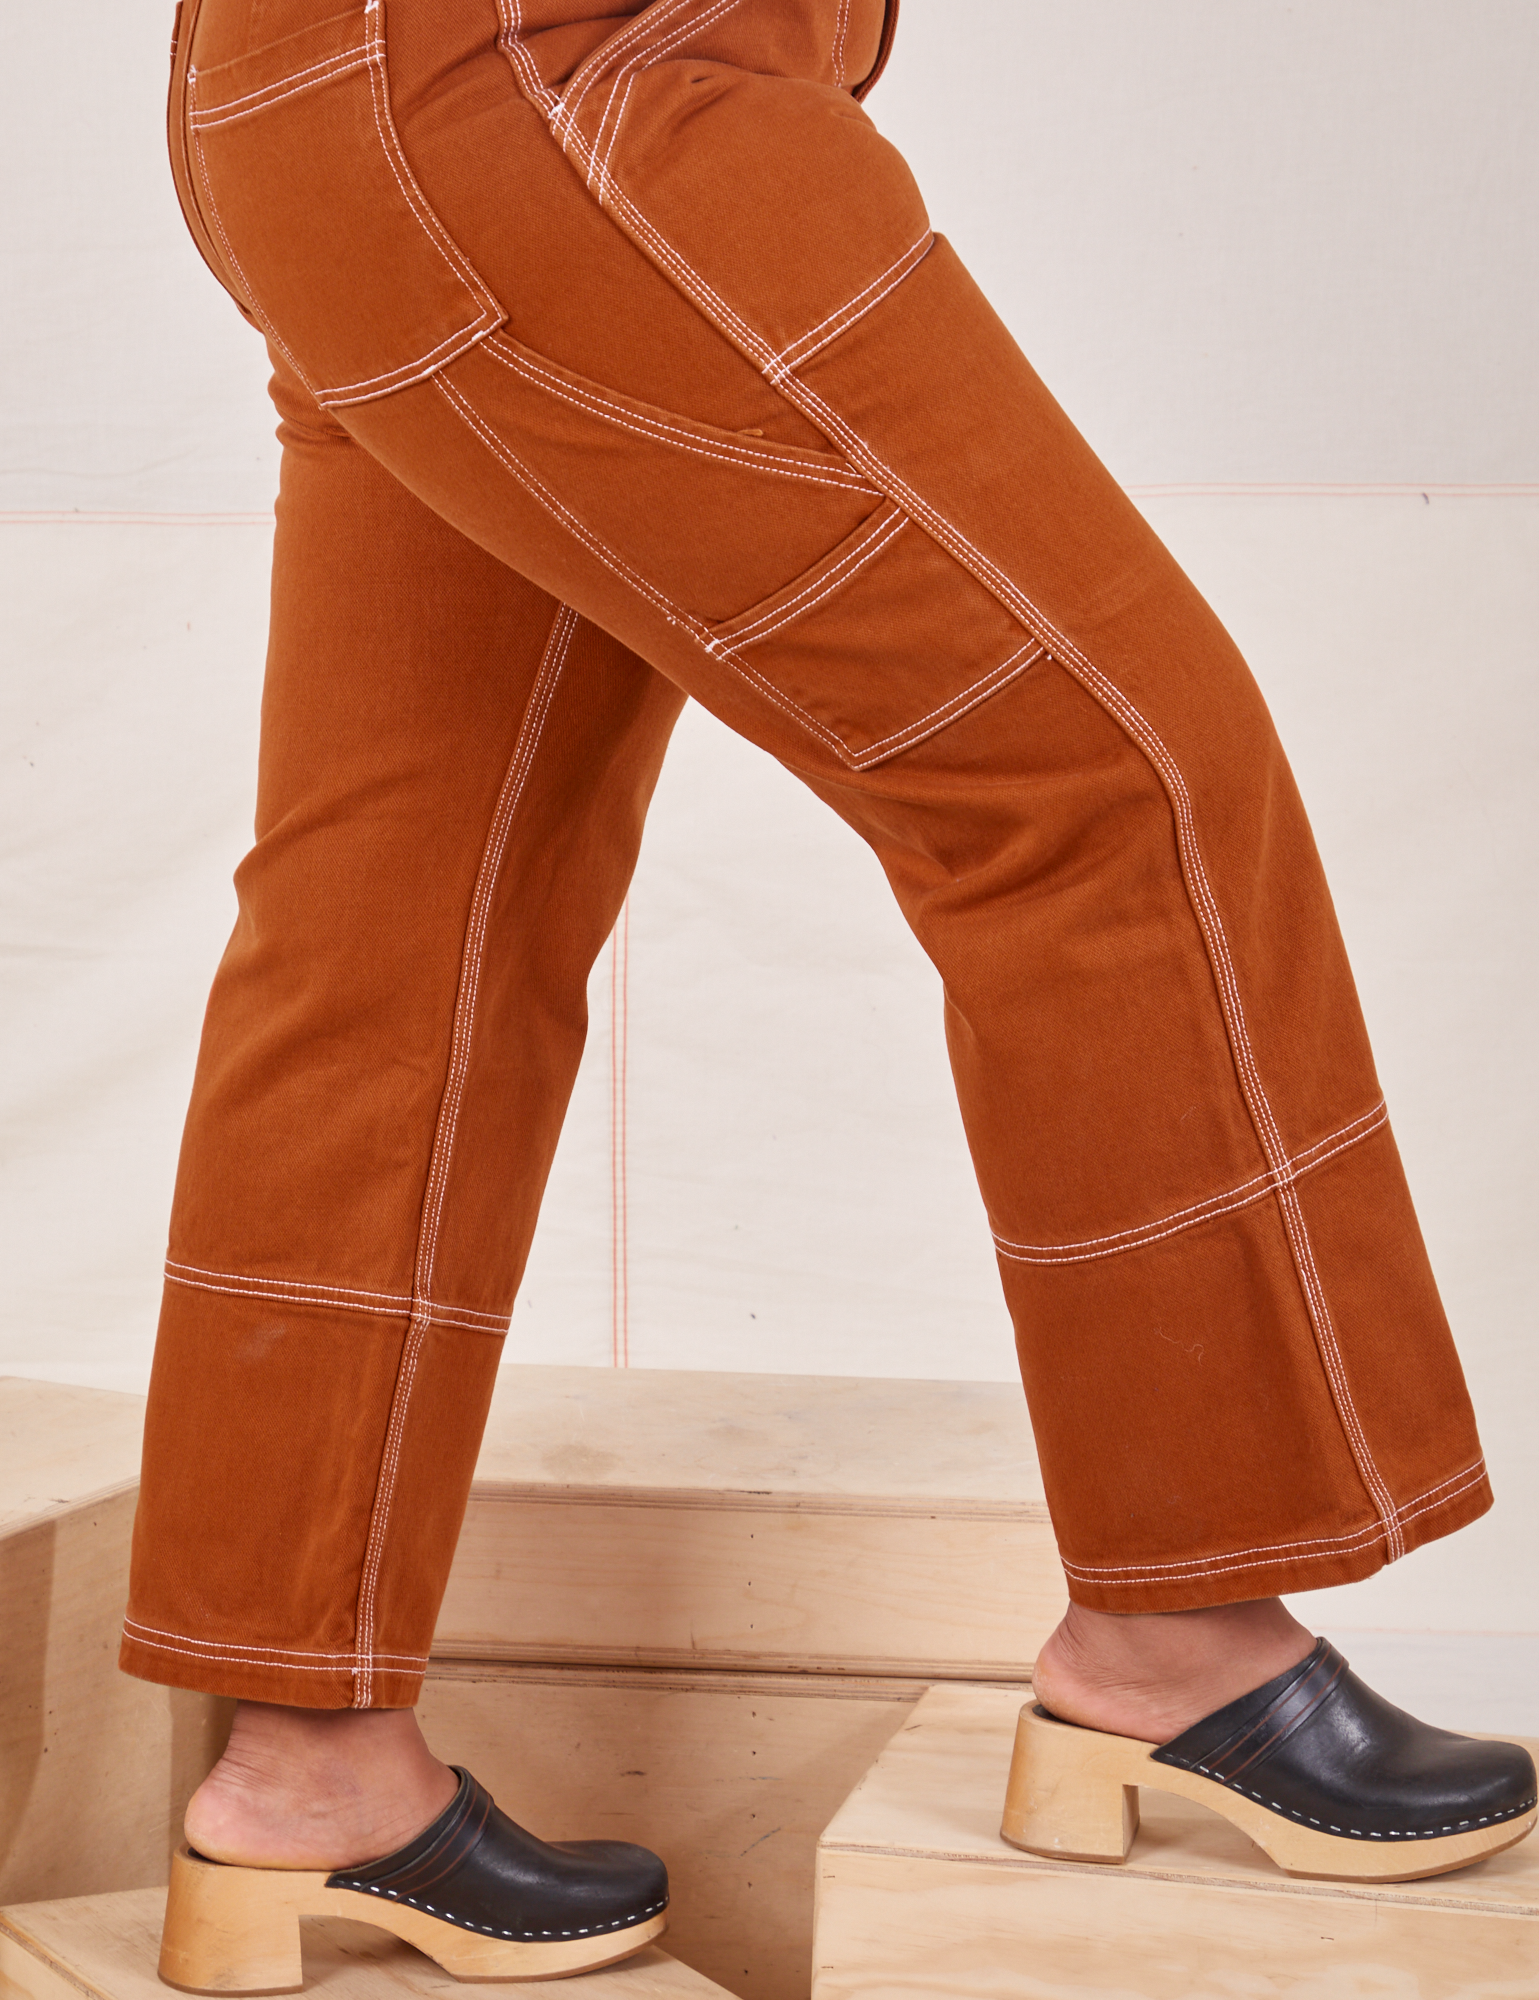 Carpenter Jeans in Burnt Terracotta side close up on Meghna